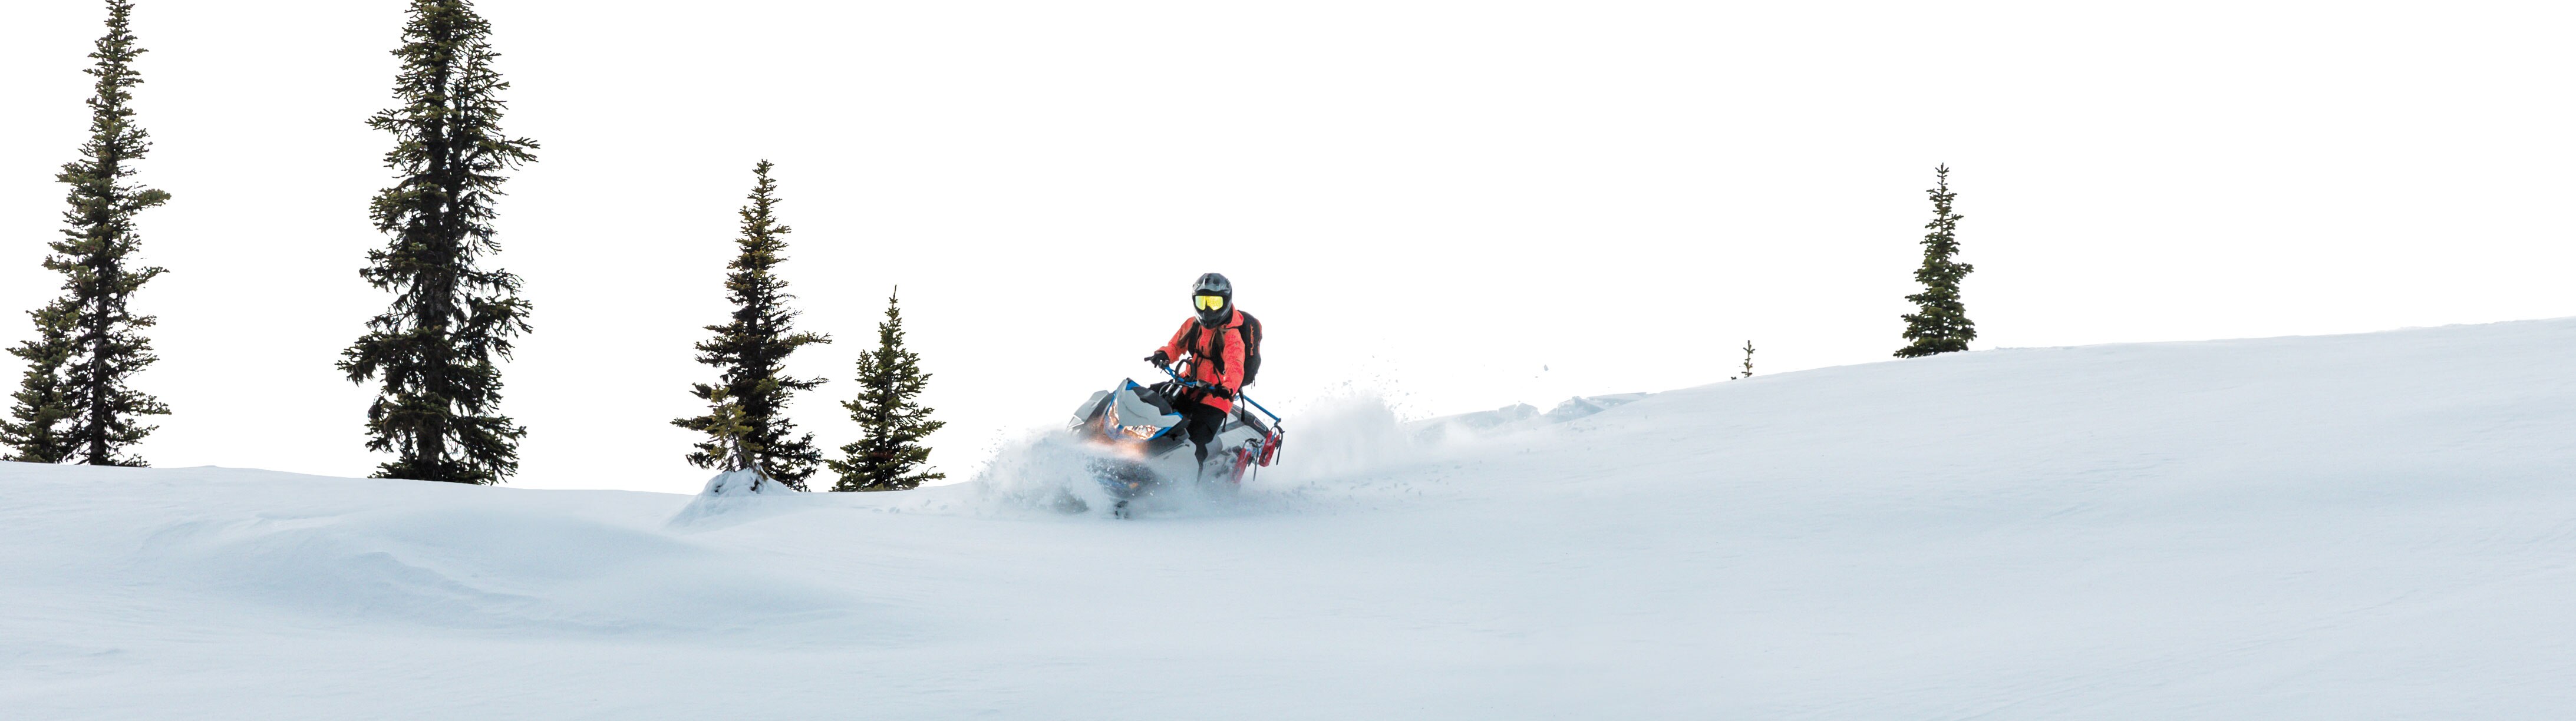 2022 Ski-Doo Summit Edge in Deep-Snow